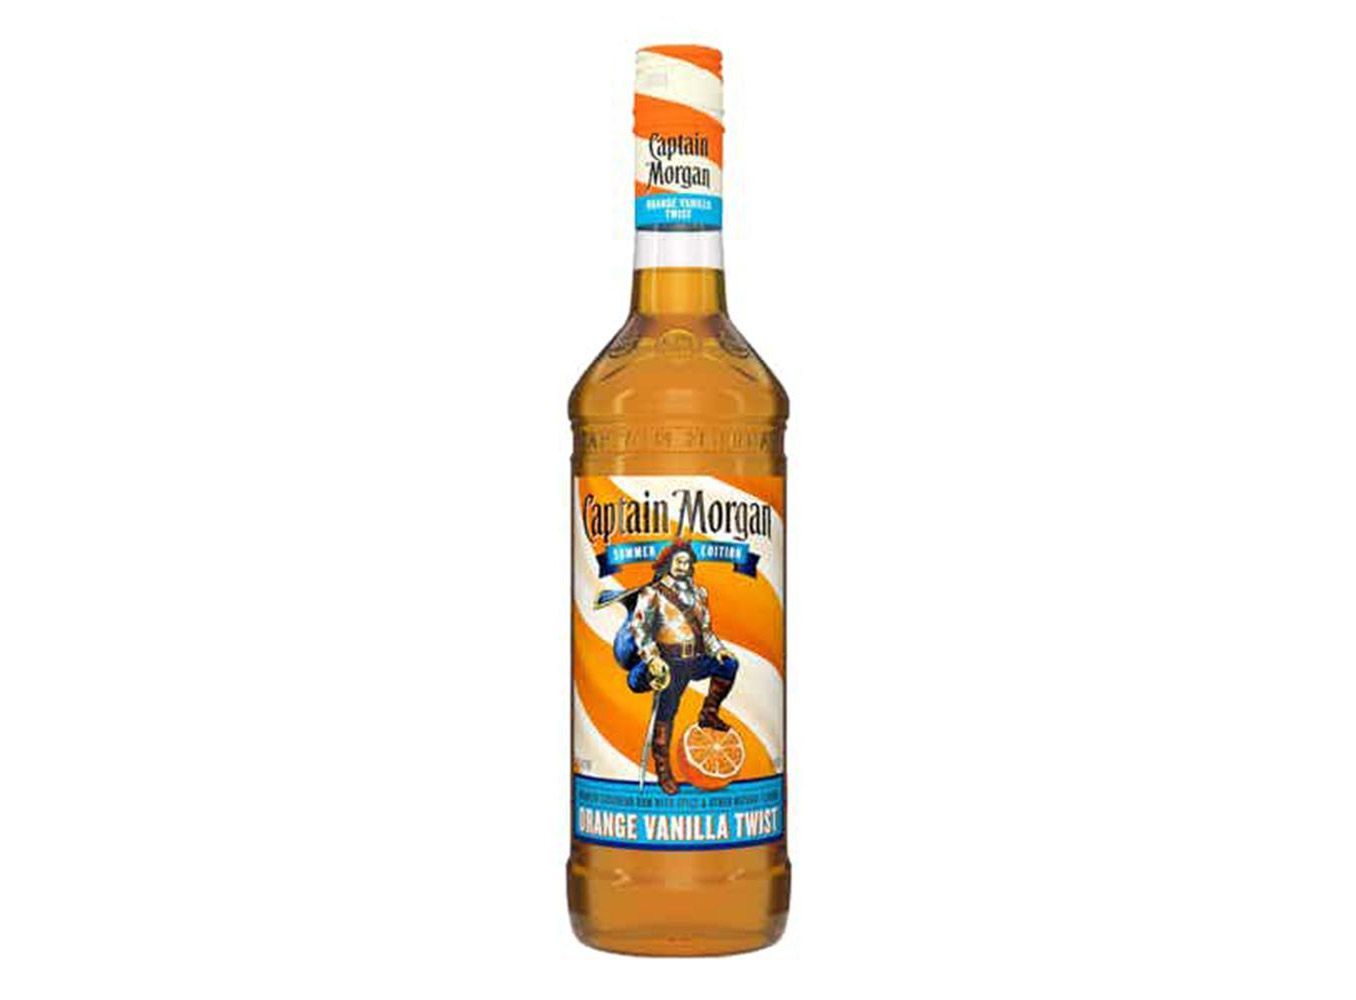 Captain Morgan New Flavored Rum That Tastes Like Creamsicles - captain morgan creamsicles flavor